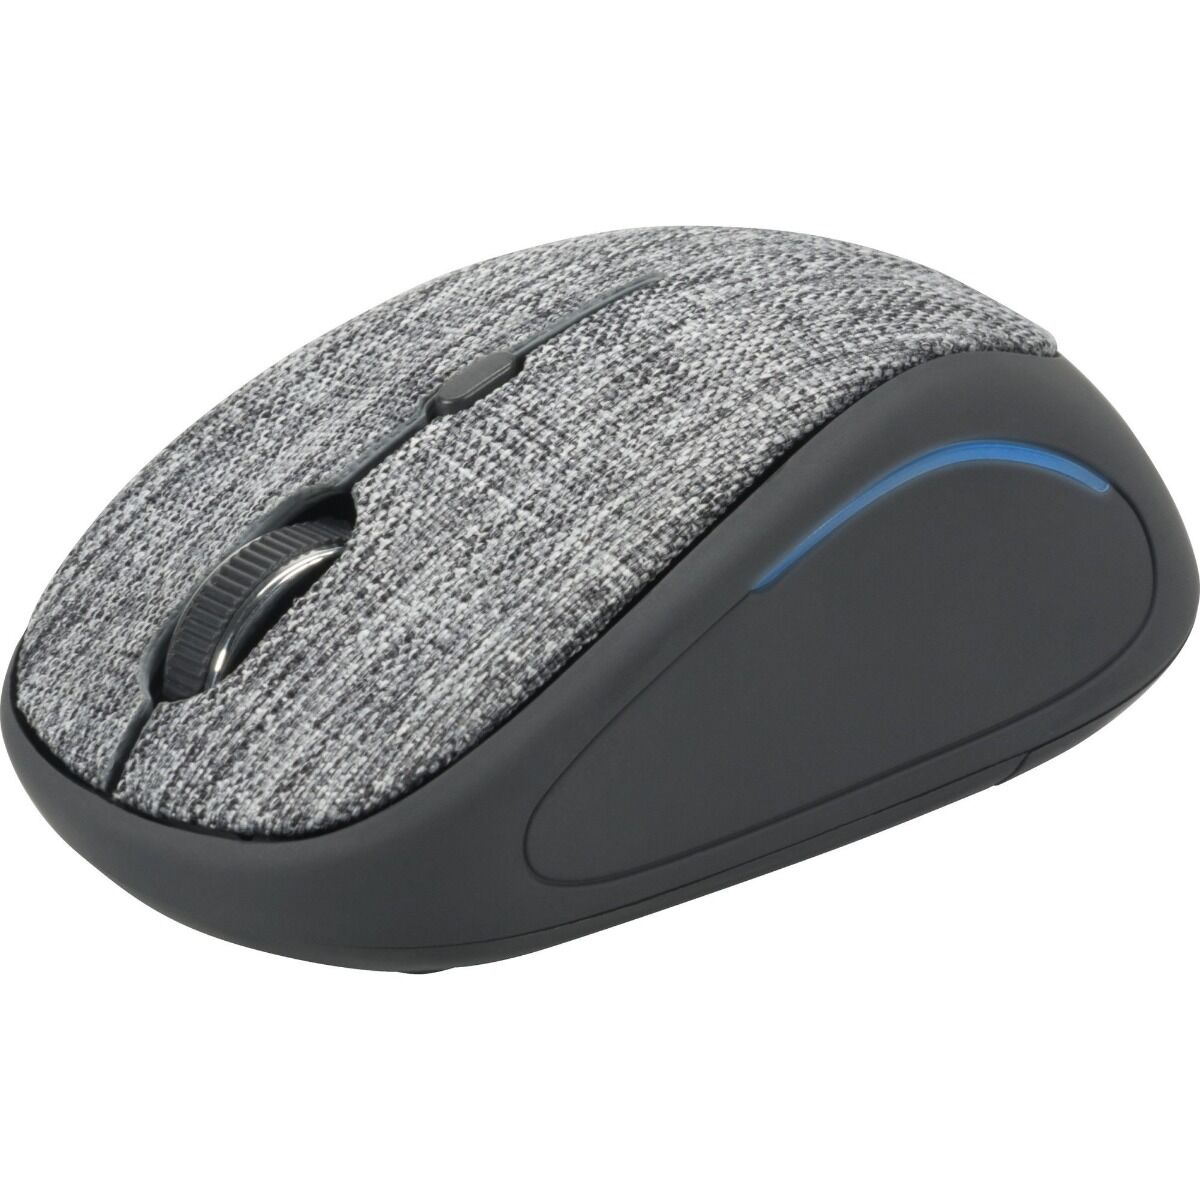 Mouse wireless USB Cius Grey SpeedLink